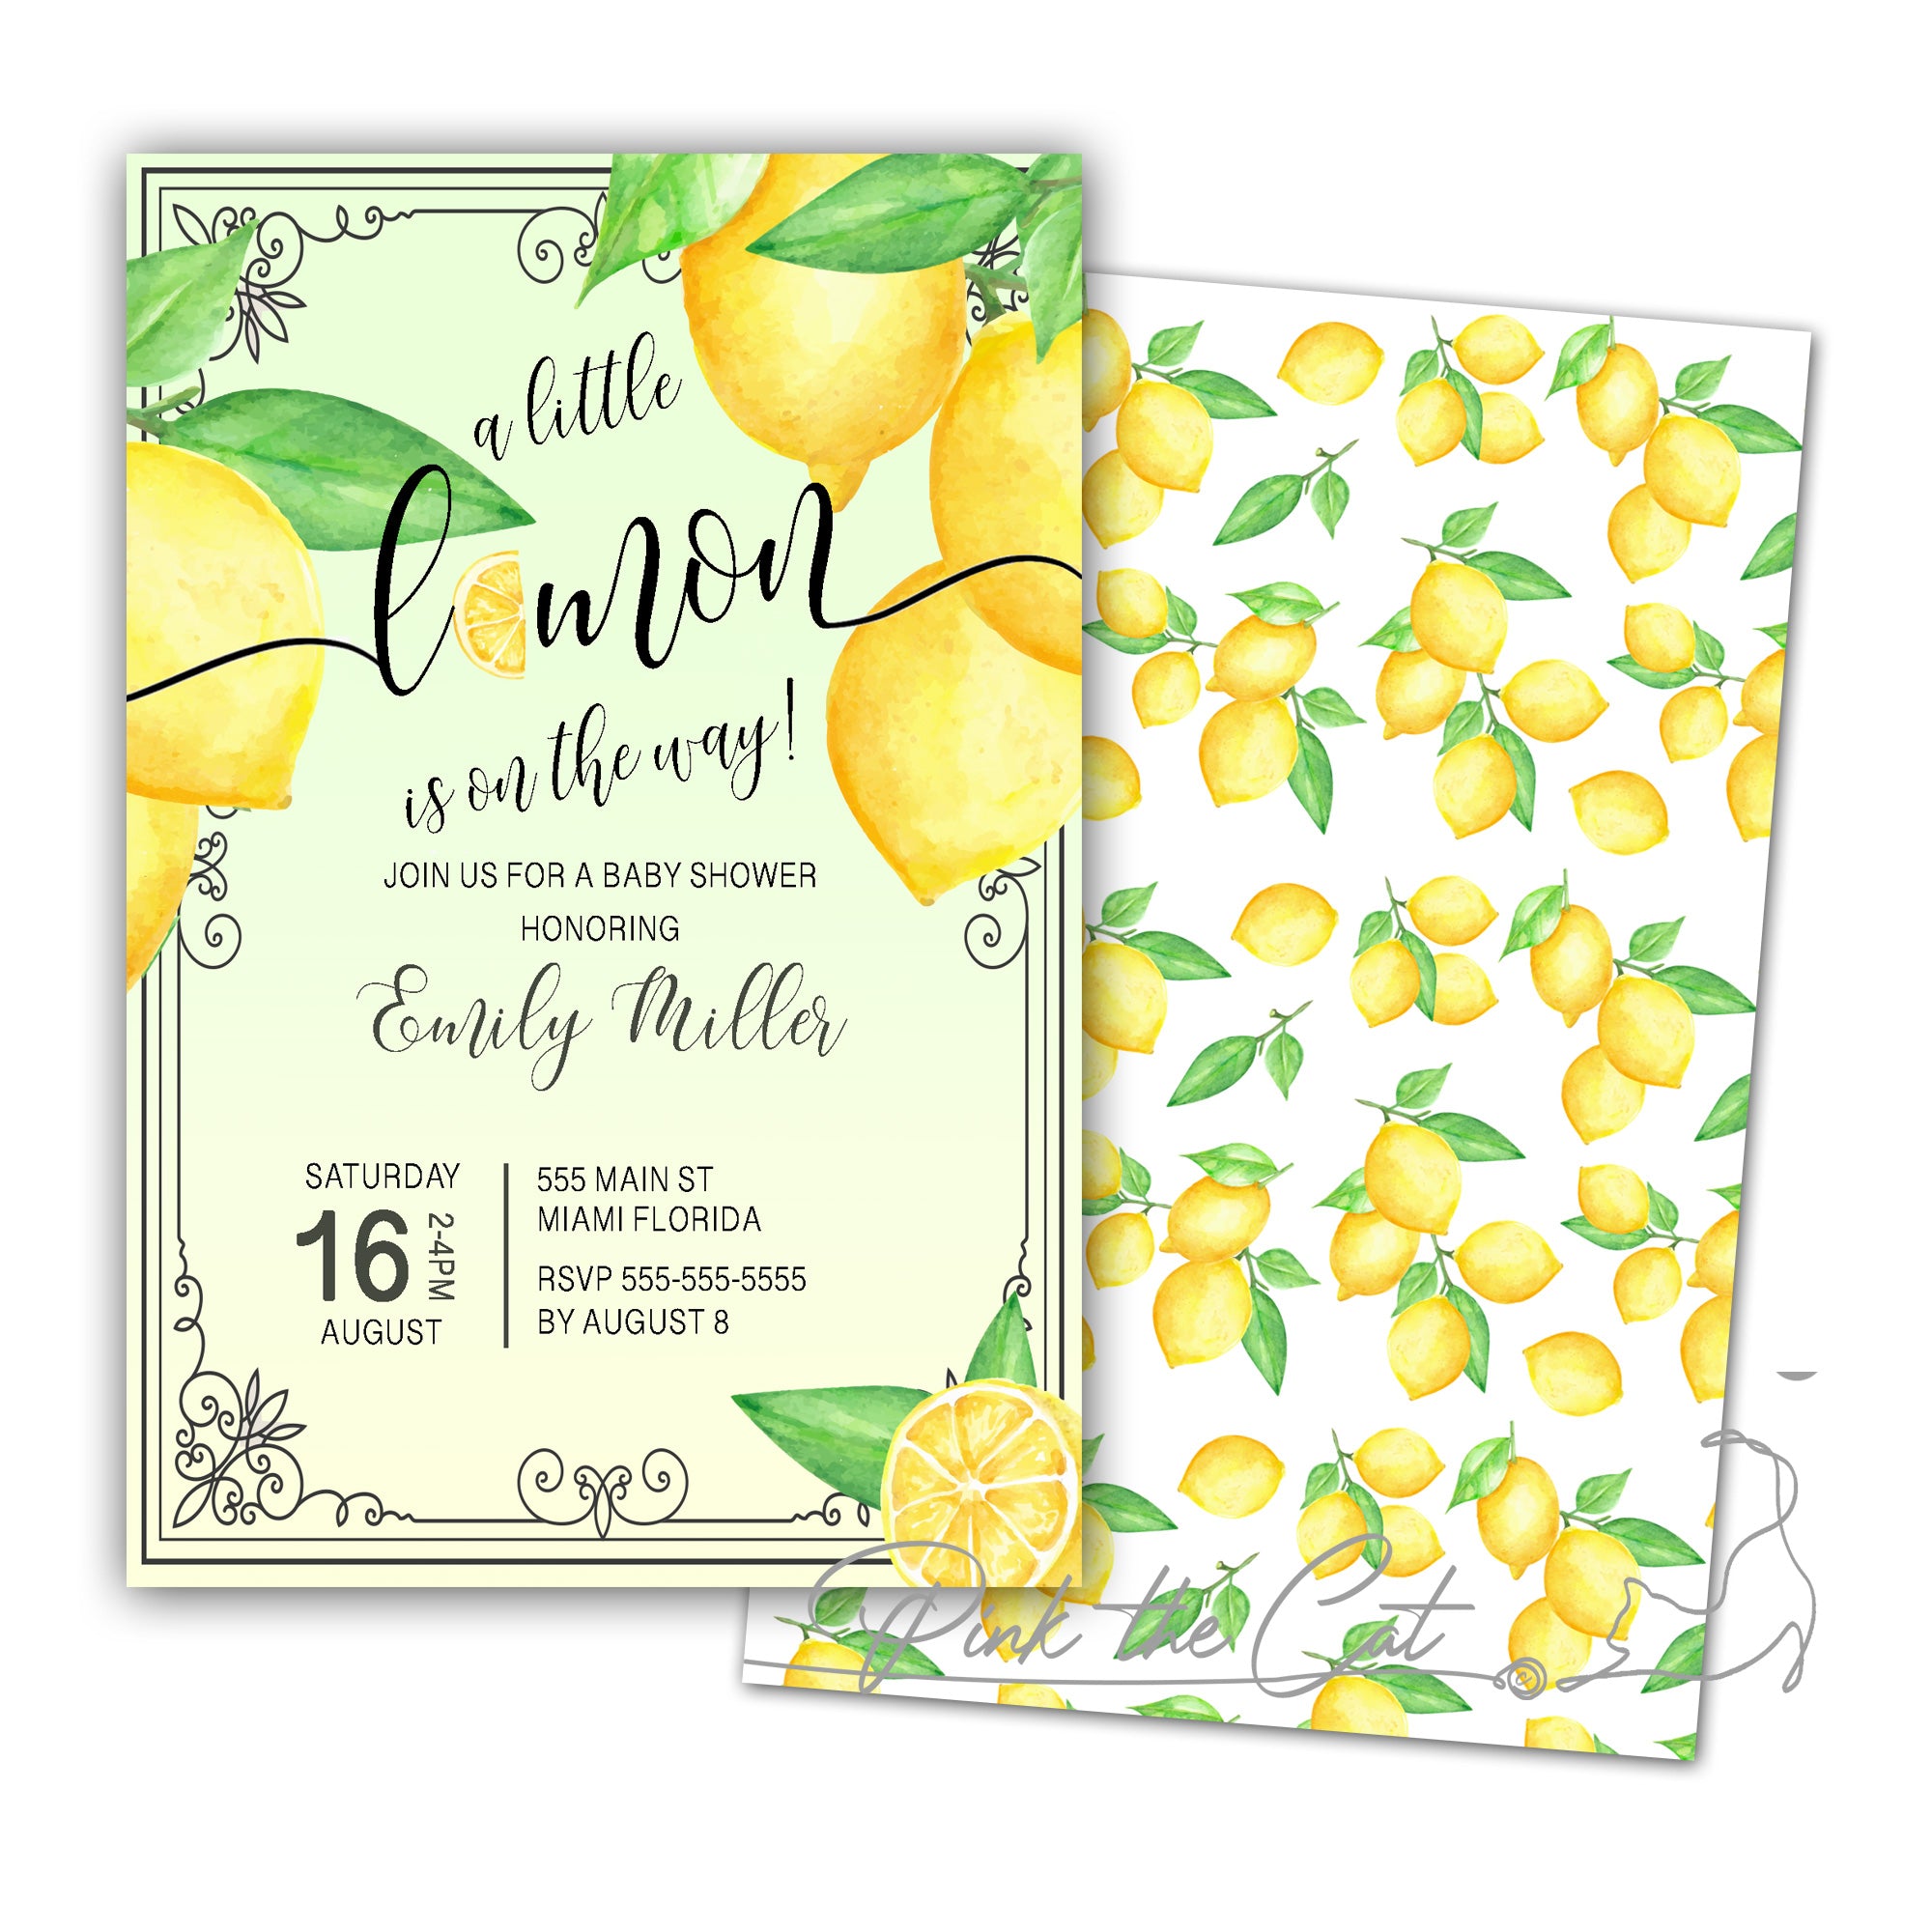 Little lemon watercolor invitation